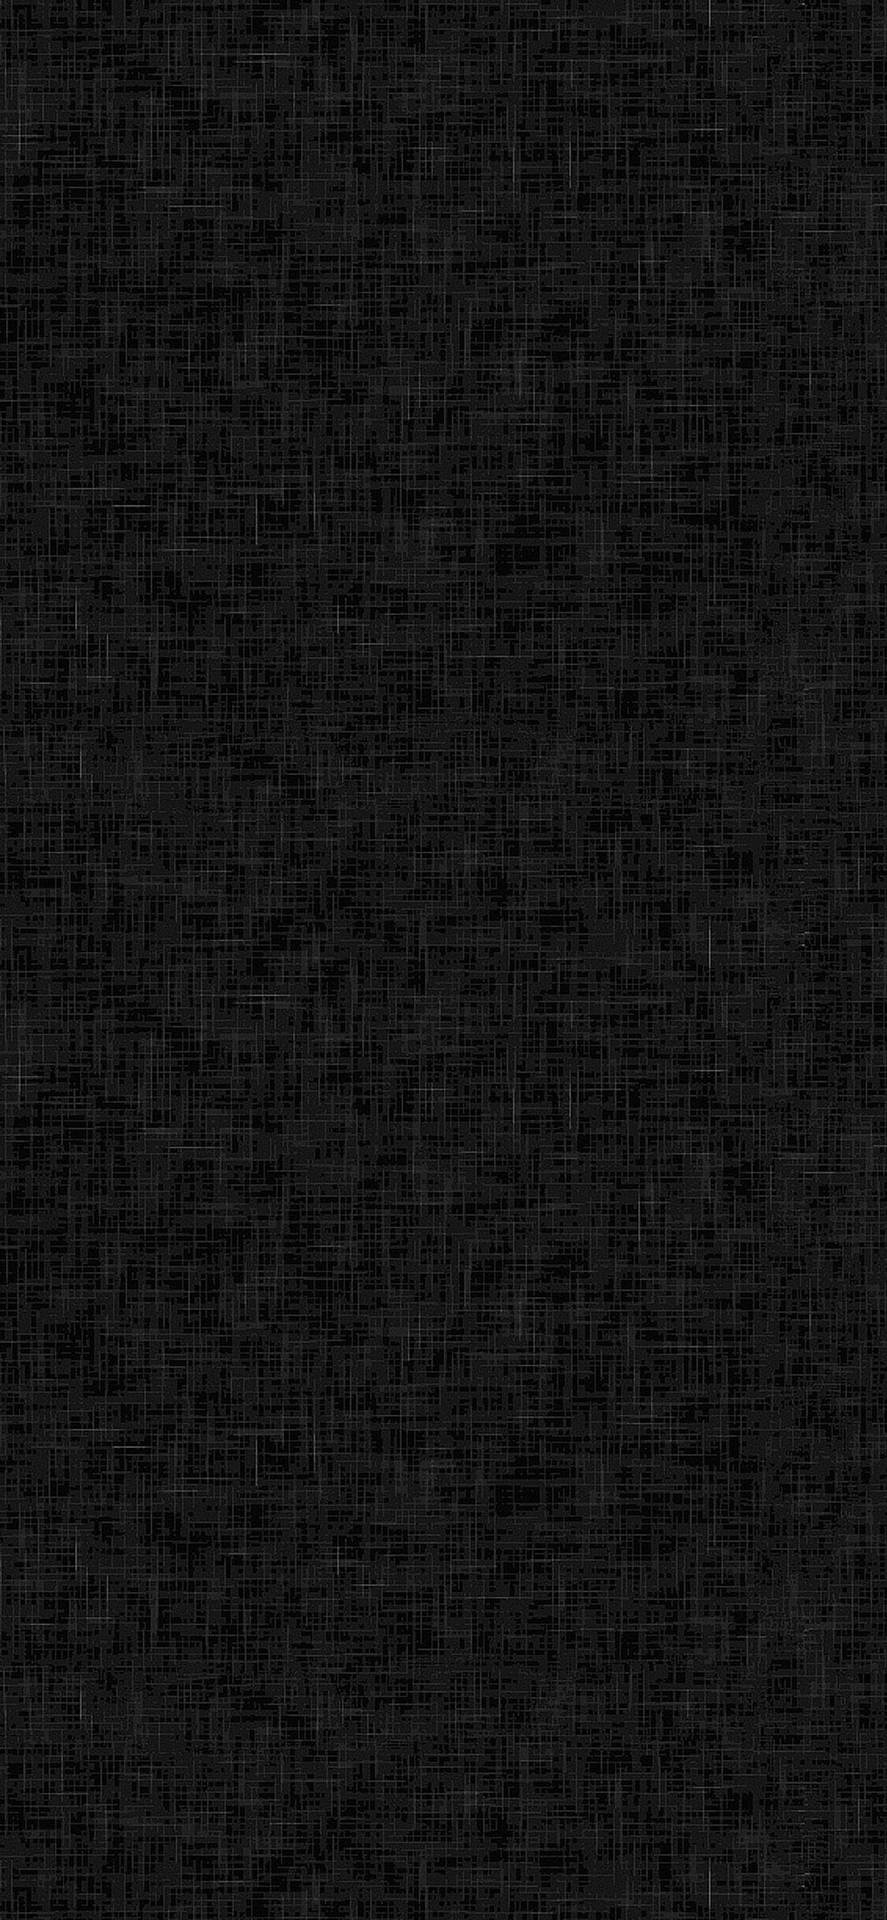 Strukturiertesmuster Auf Schwarzem Leder Iphone Wallpaper